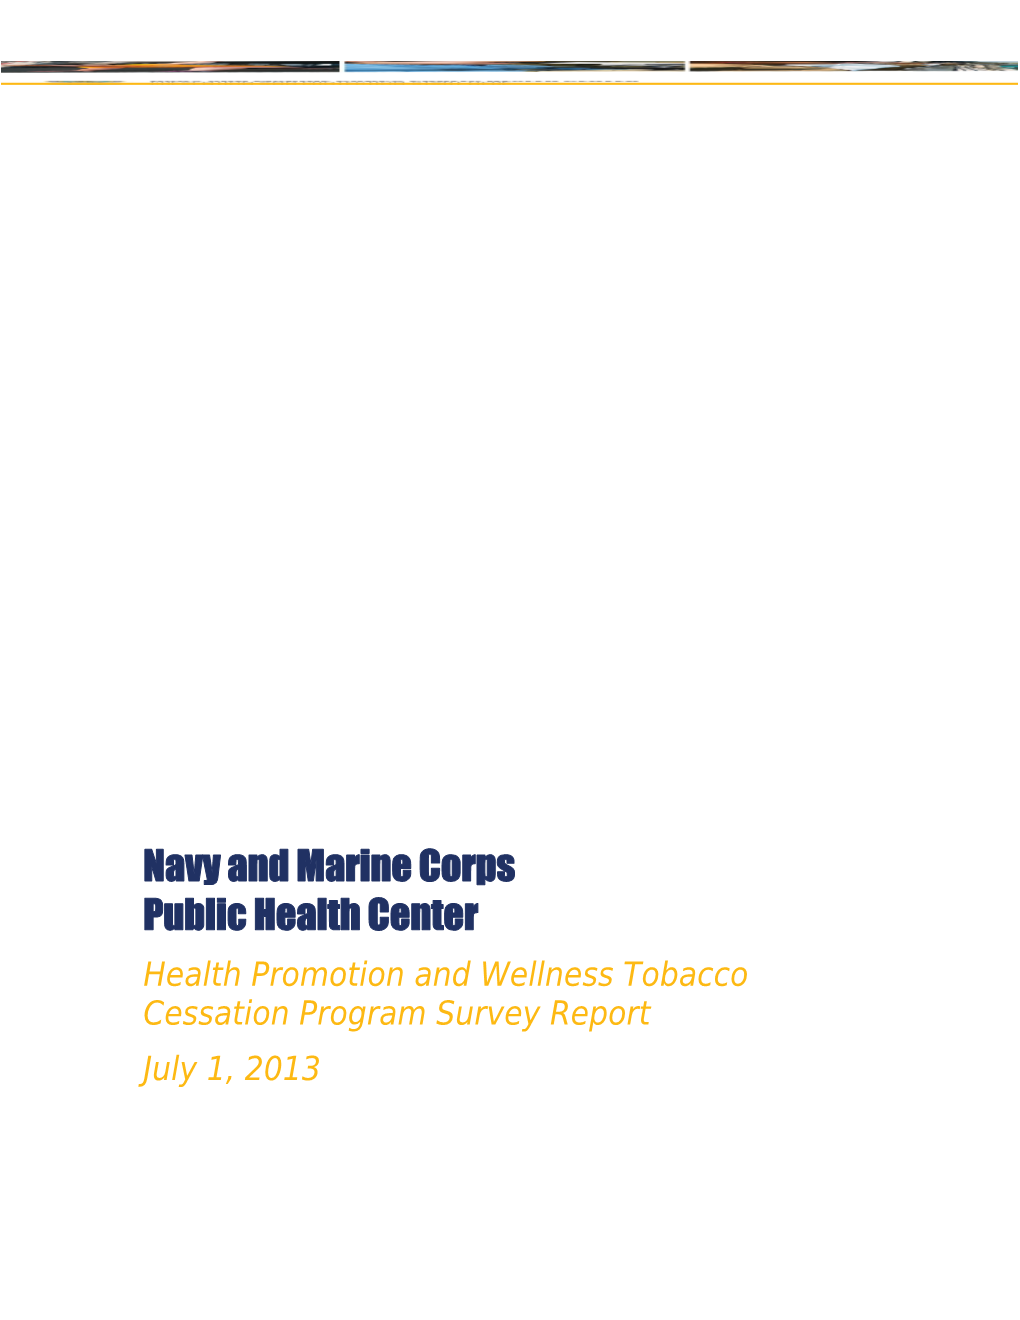 Health Promotion and Wellness Tobacco Cessation Program Survey Report